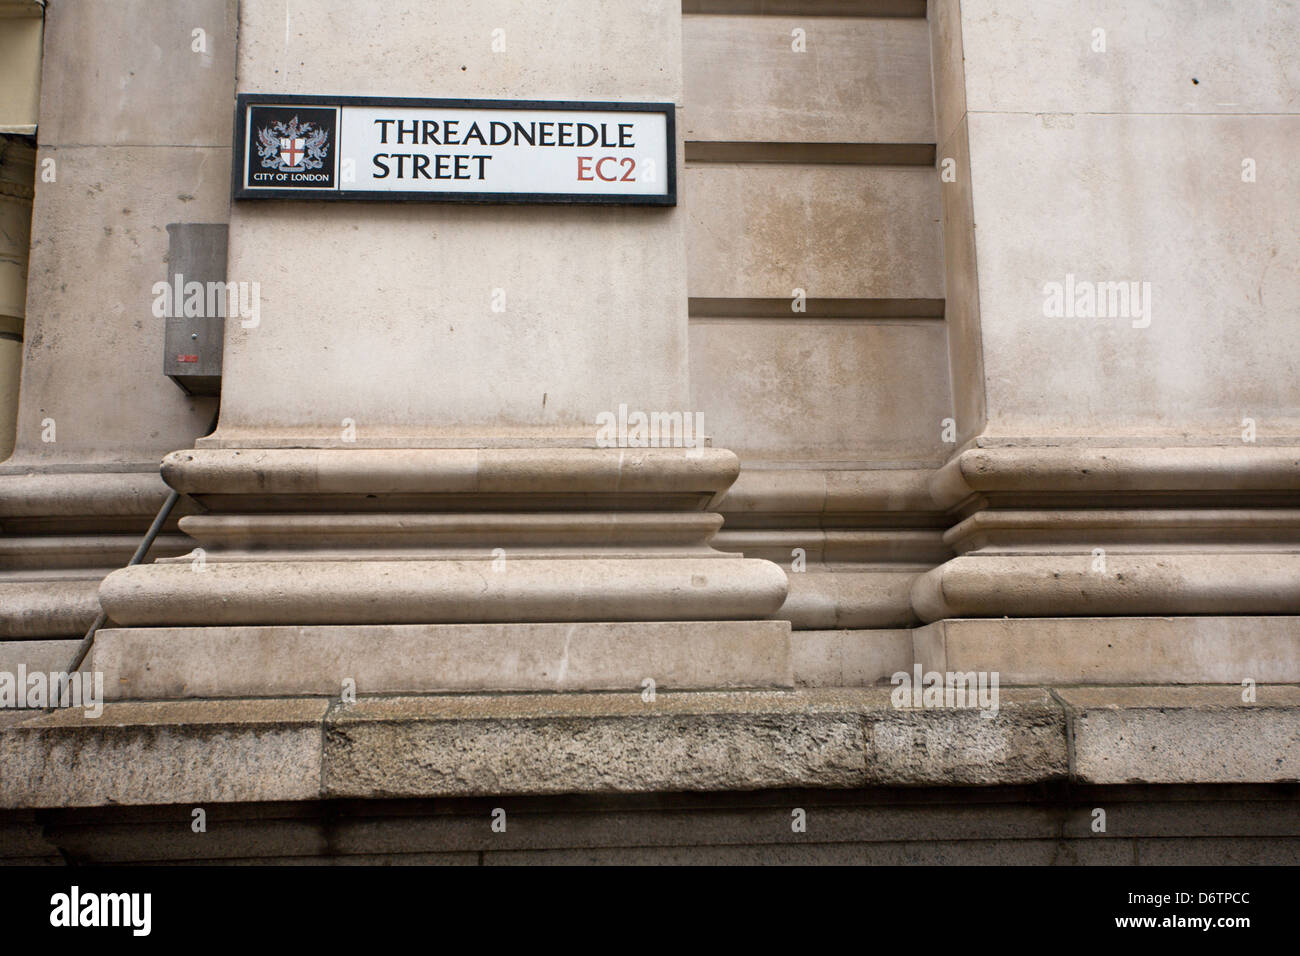 Threadneedle Street ec2 street sign Banque D'Images